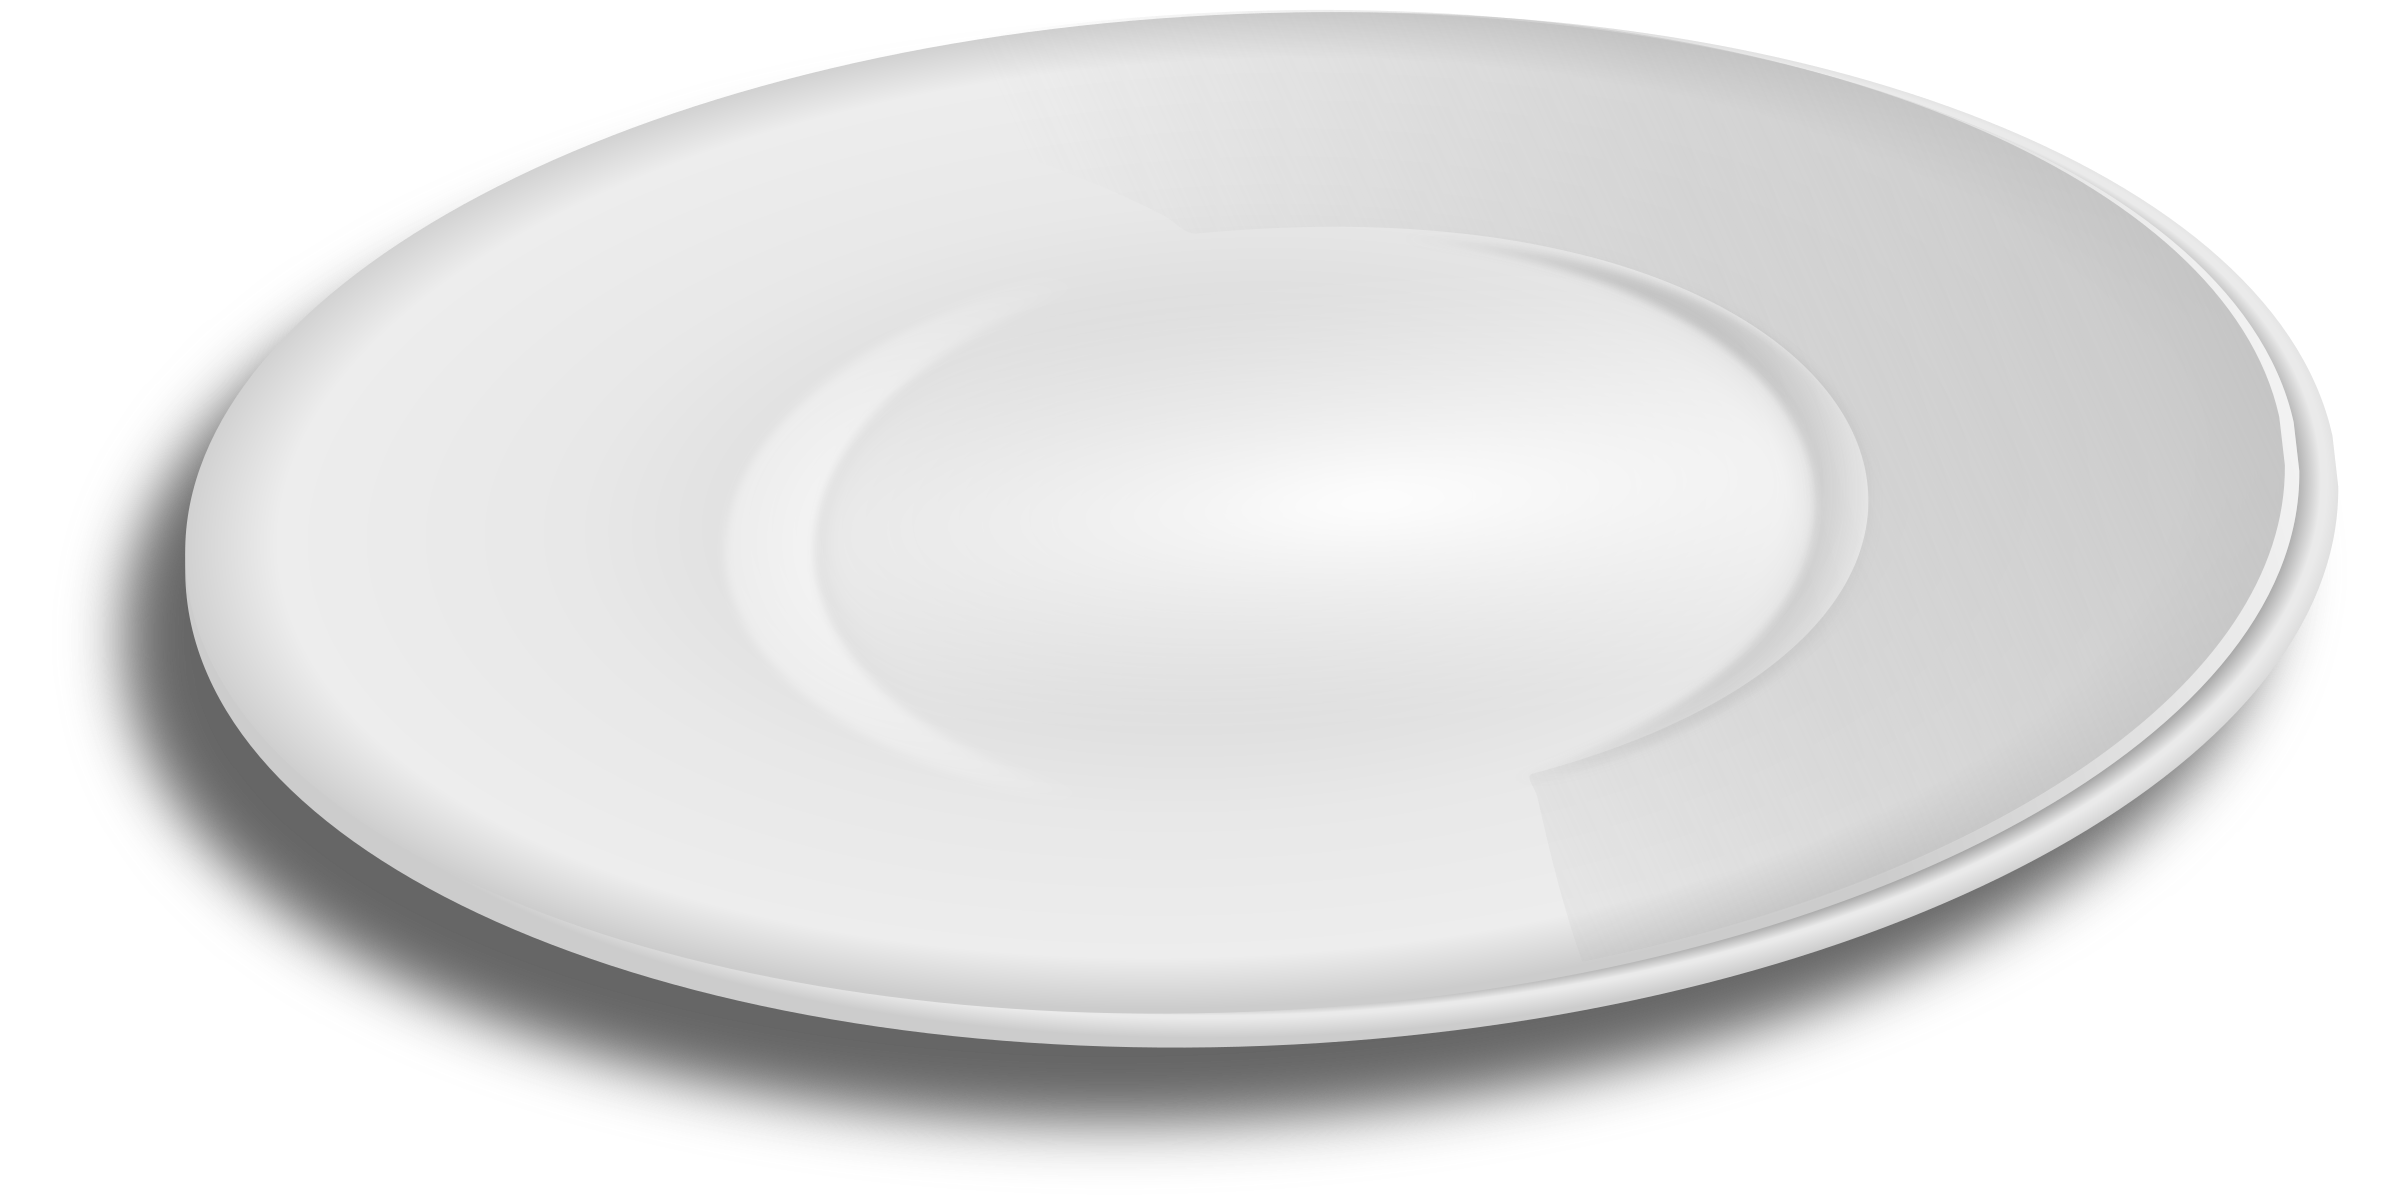 plate clipart dishware